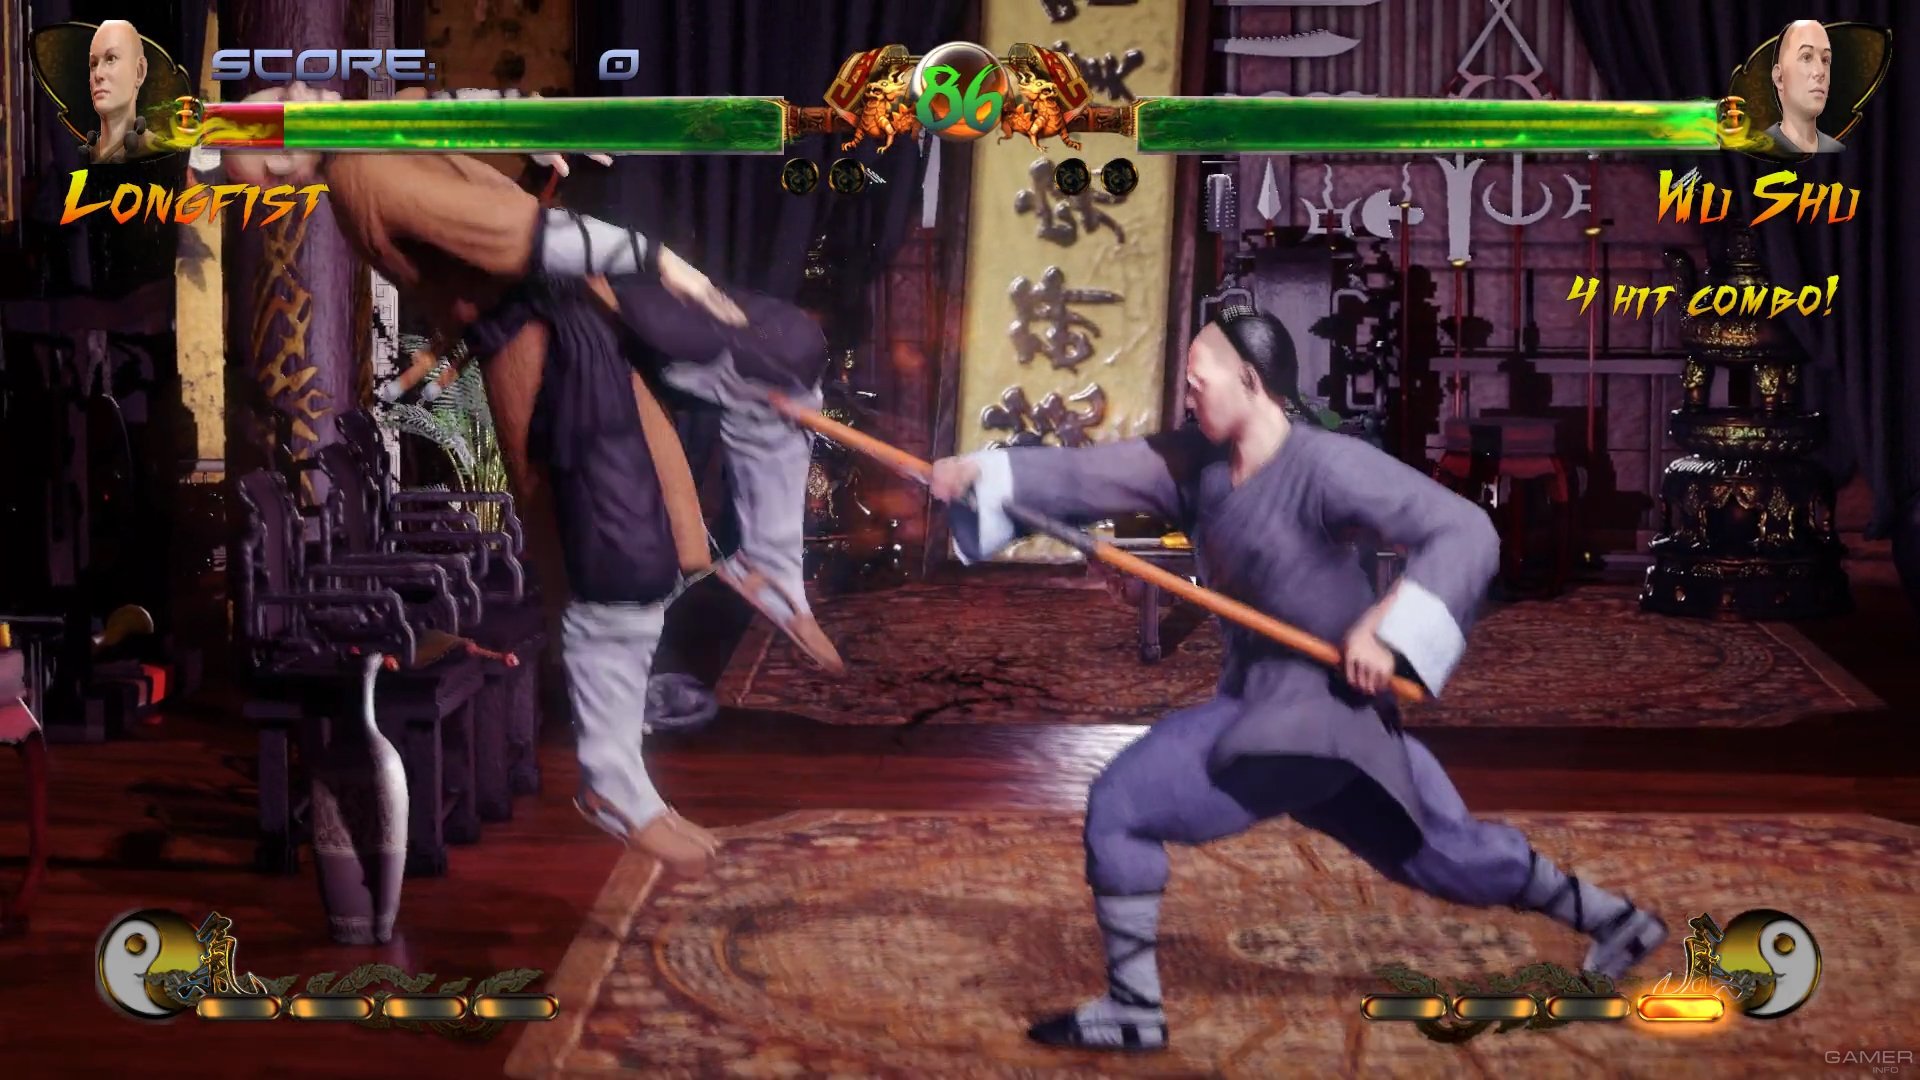 Кунг фу на английском языке. Игра Shaolin vs Wutang 2. Игра Shaolin vs Wutang. Файтинг про Шаолинь. Shaolin vs Wutang PS 4.